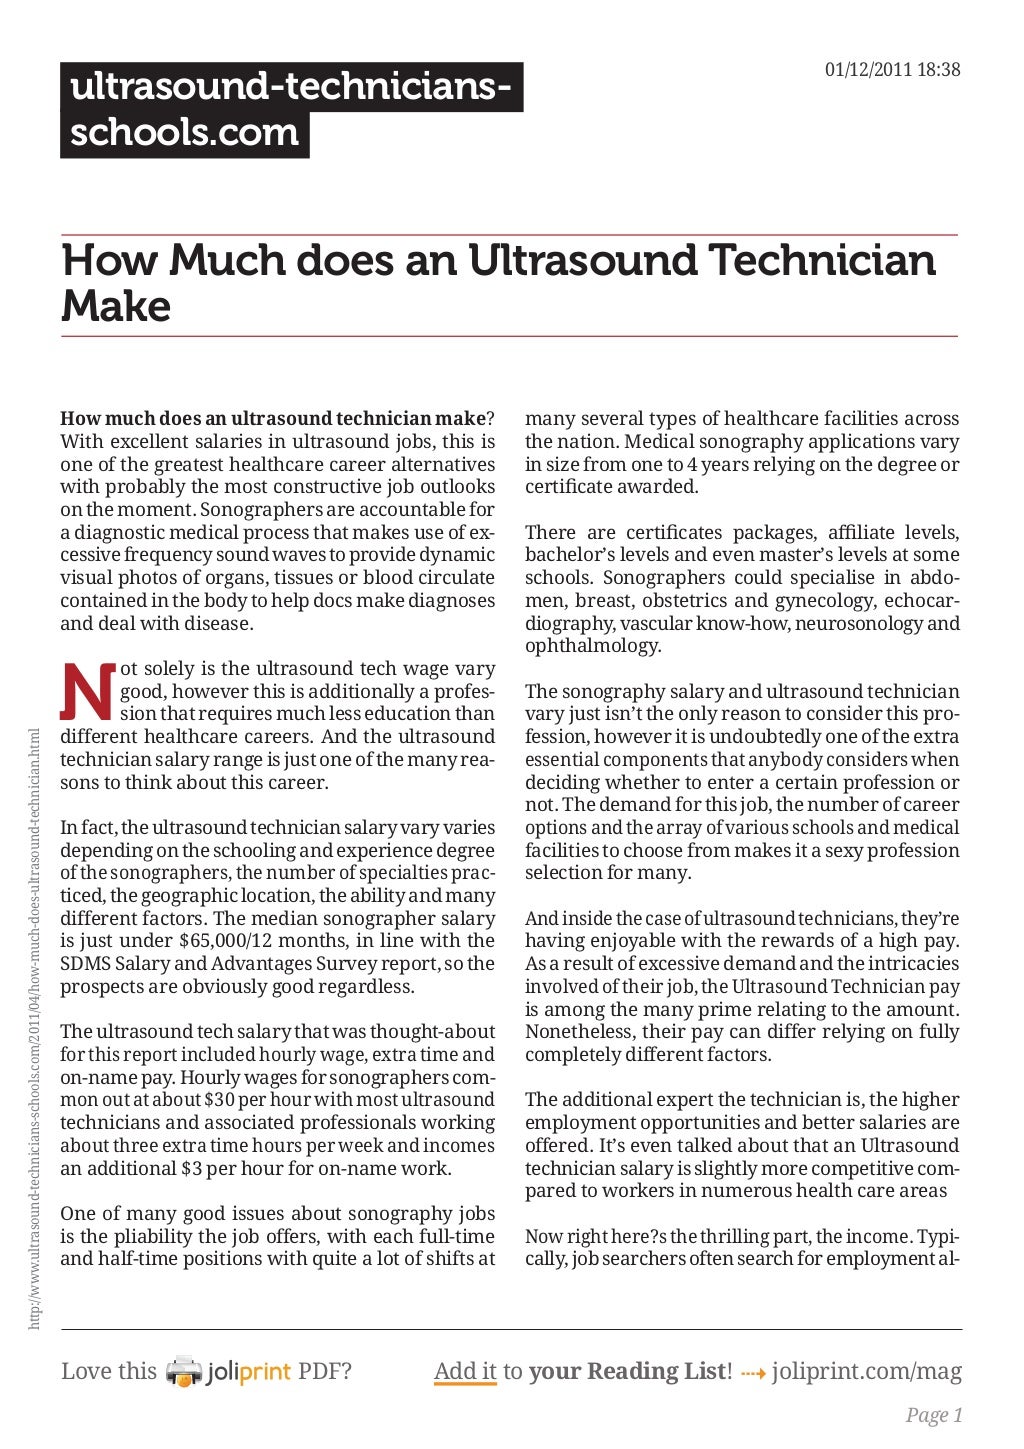 How much does an ultrasound technician make